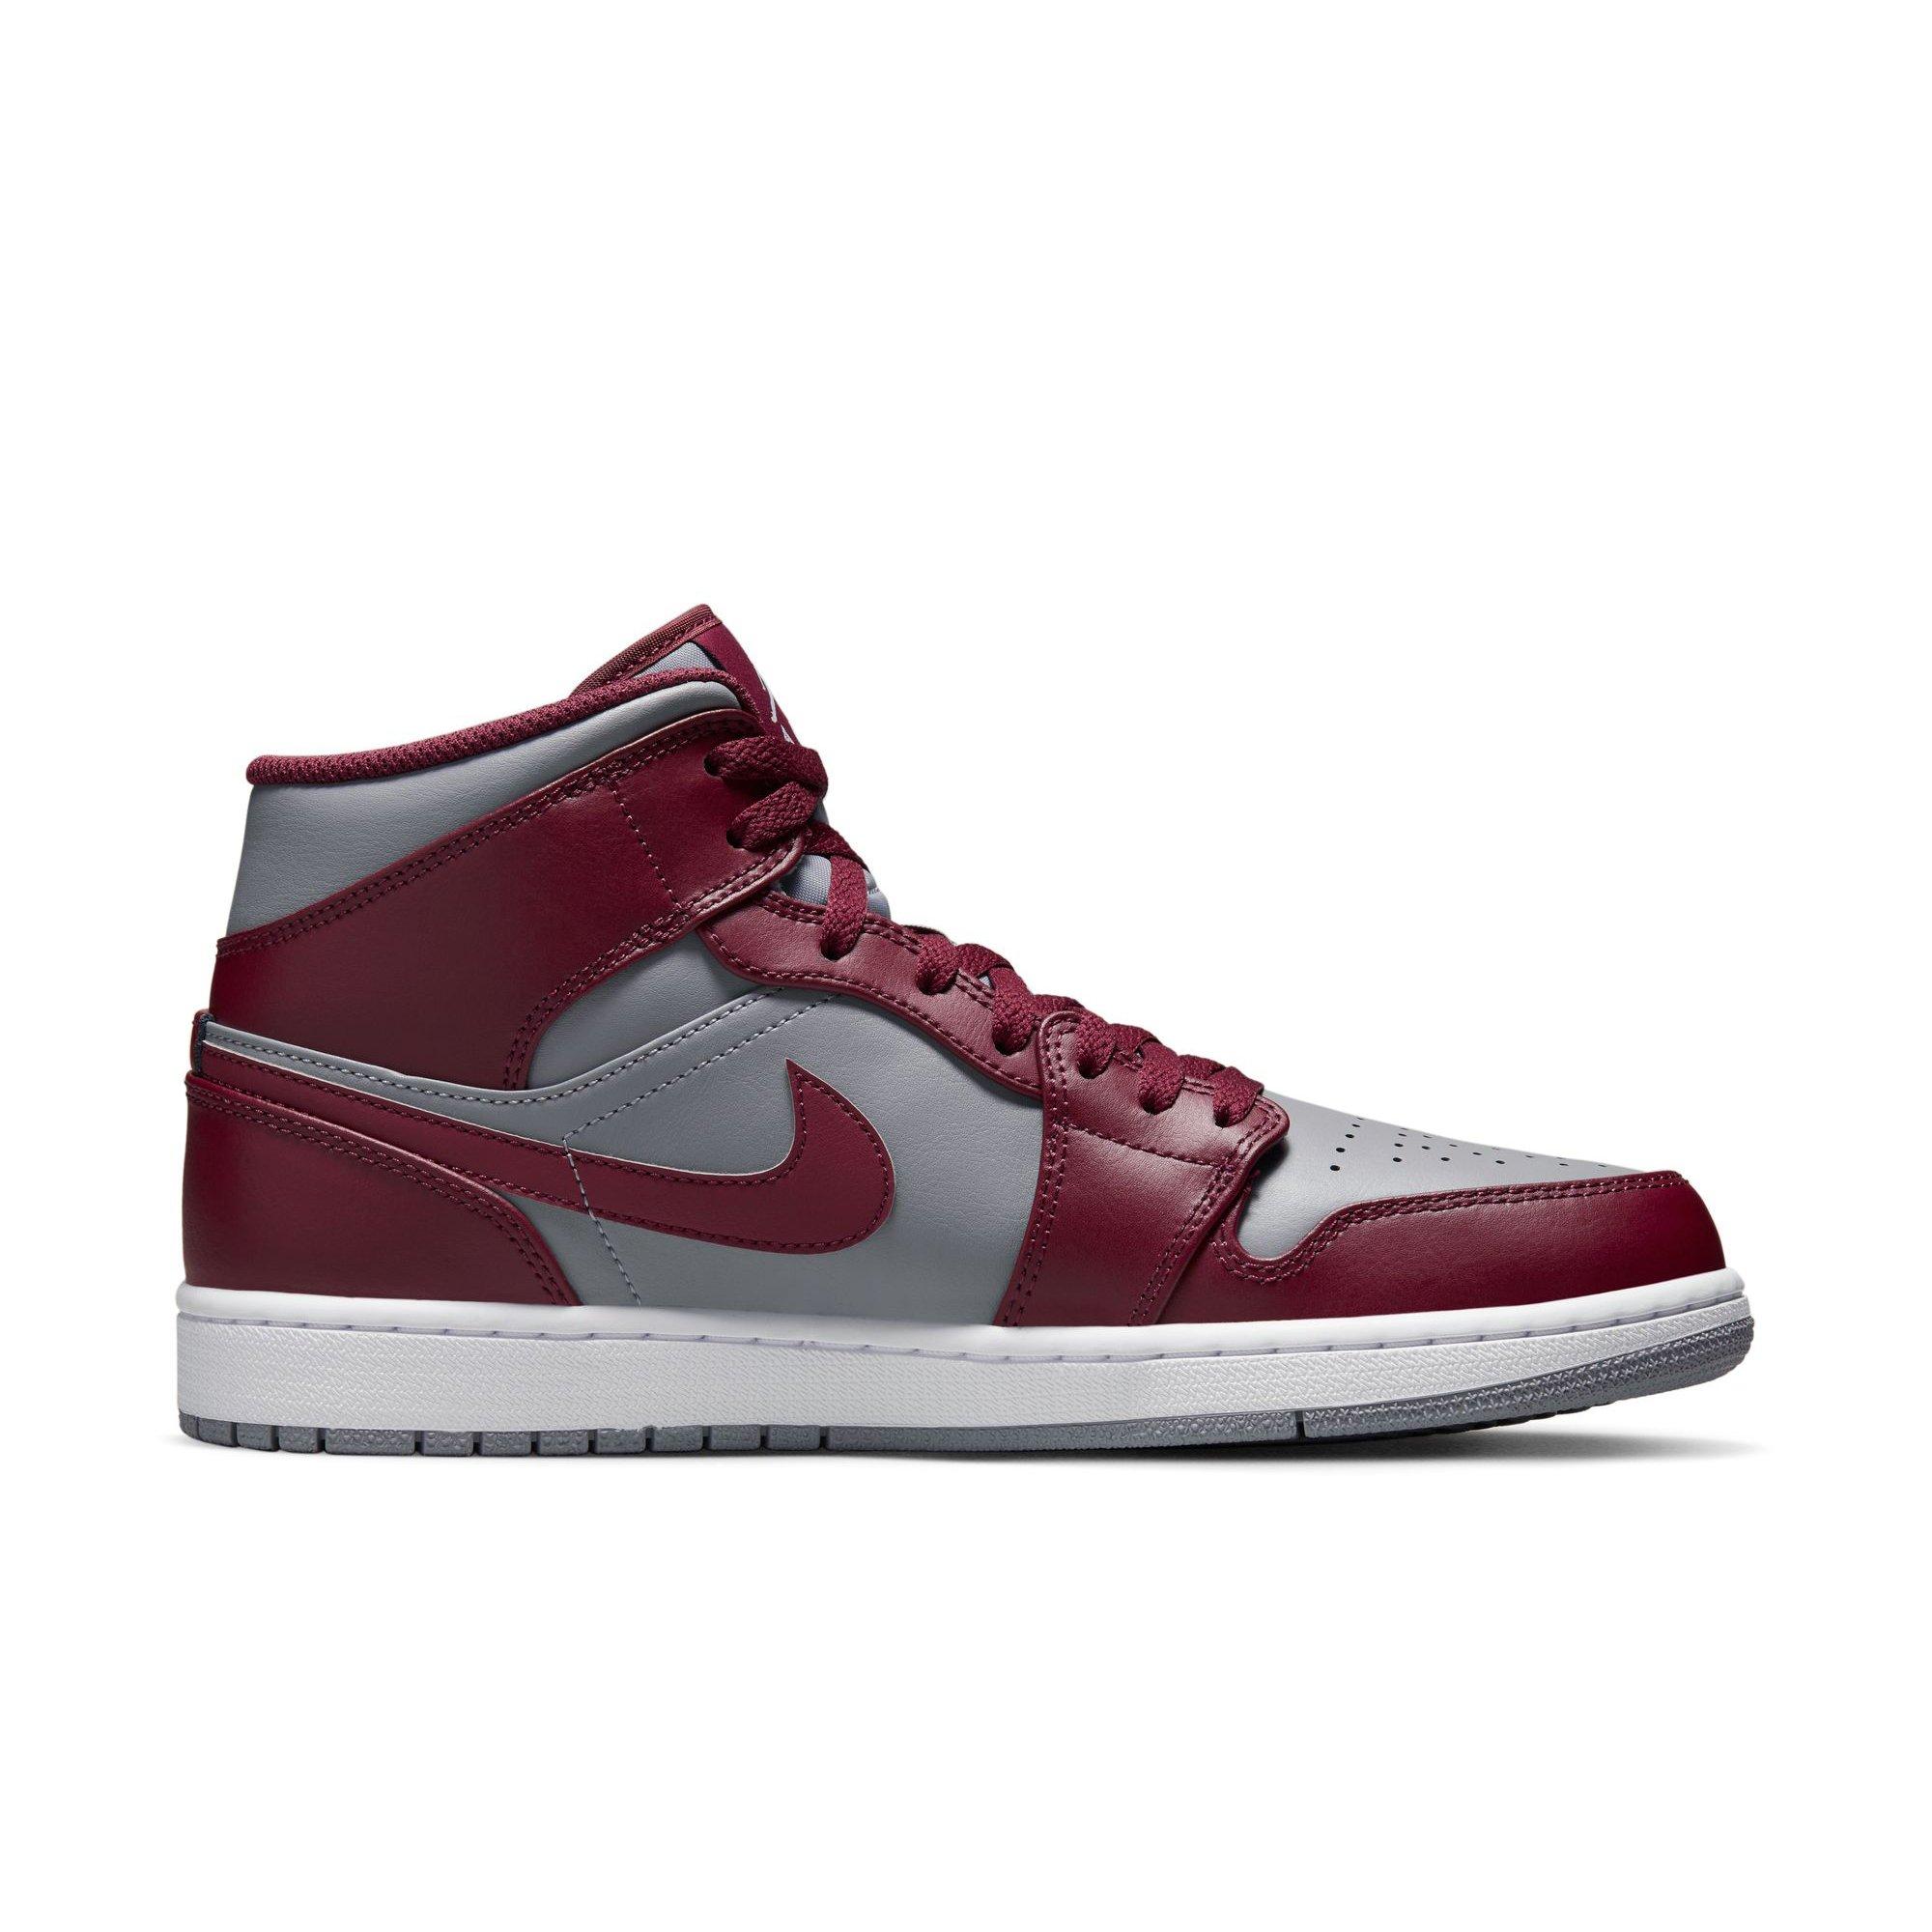 Jordan "Cherrywood Red/Cement Grey/White" Men's Shoe